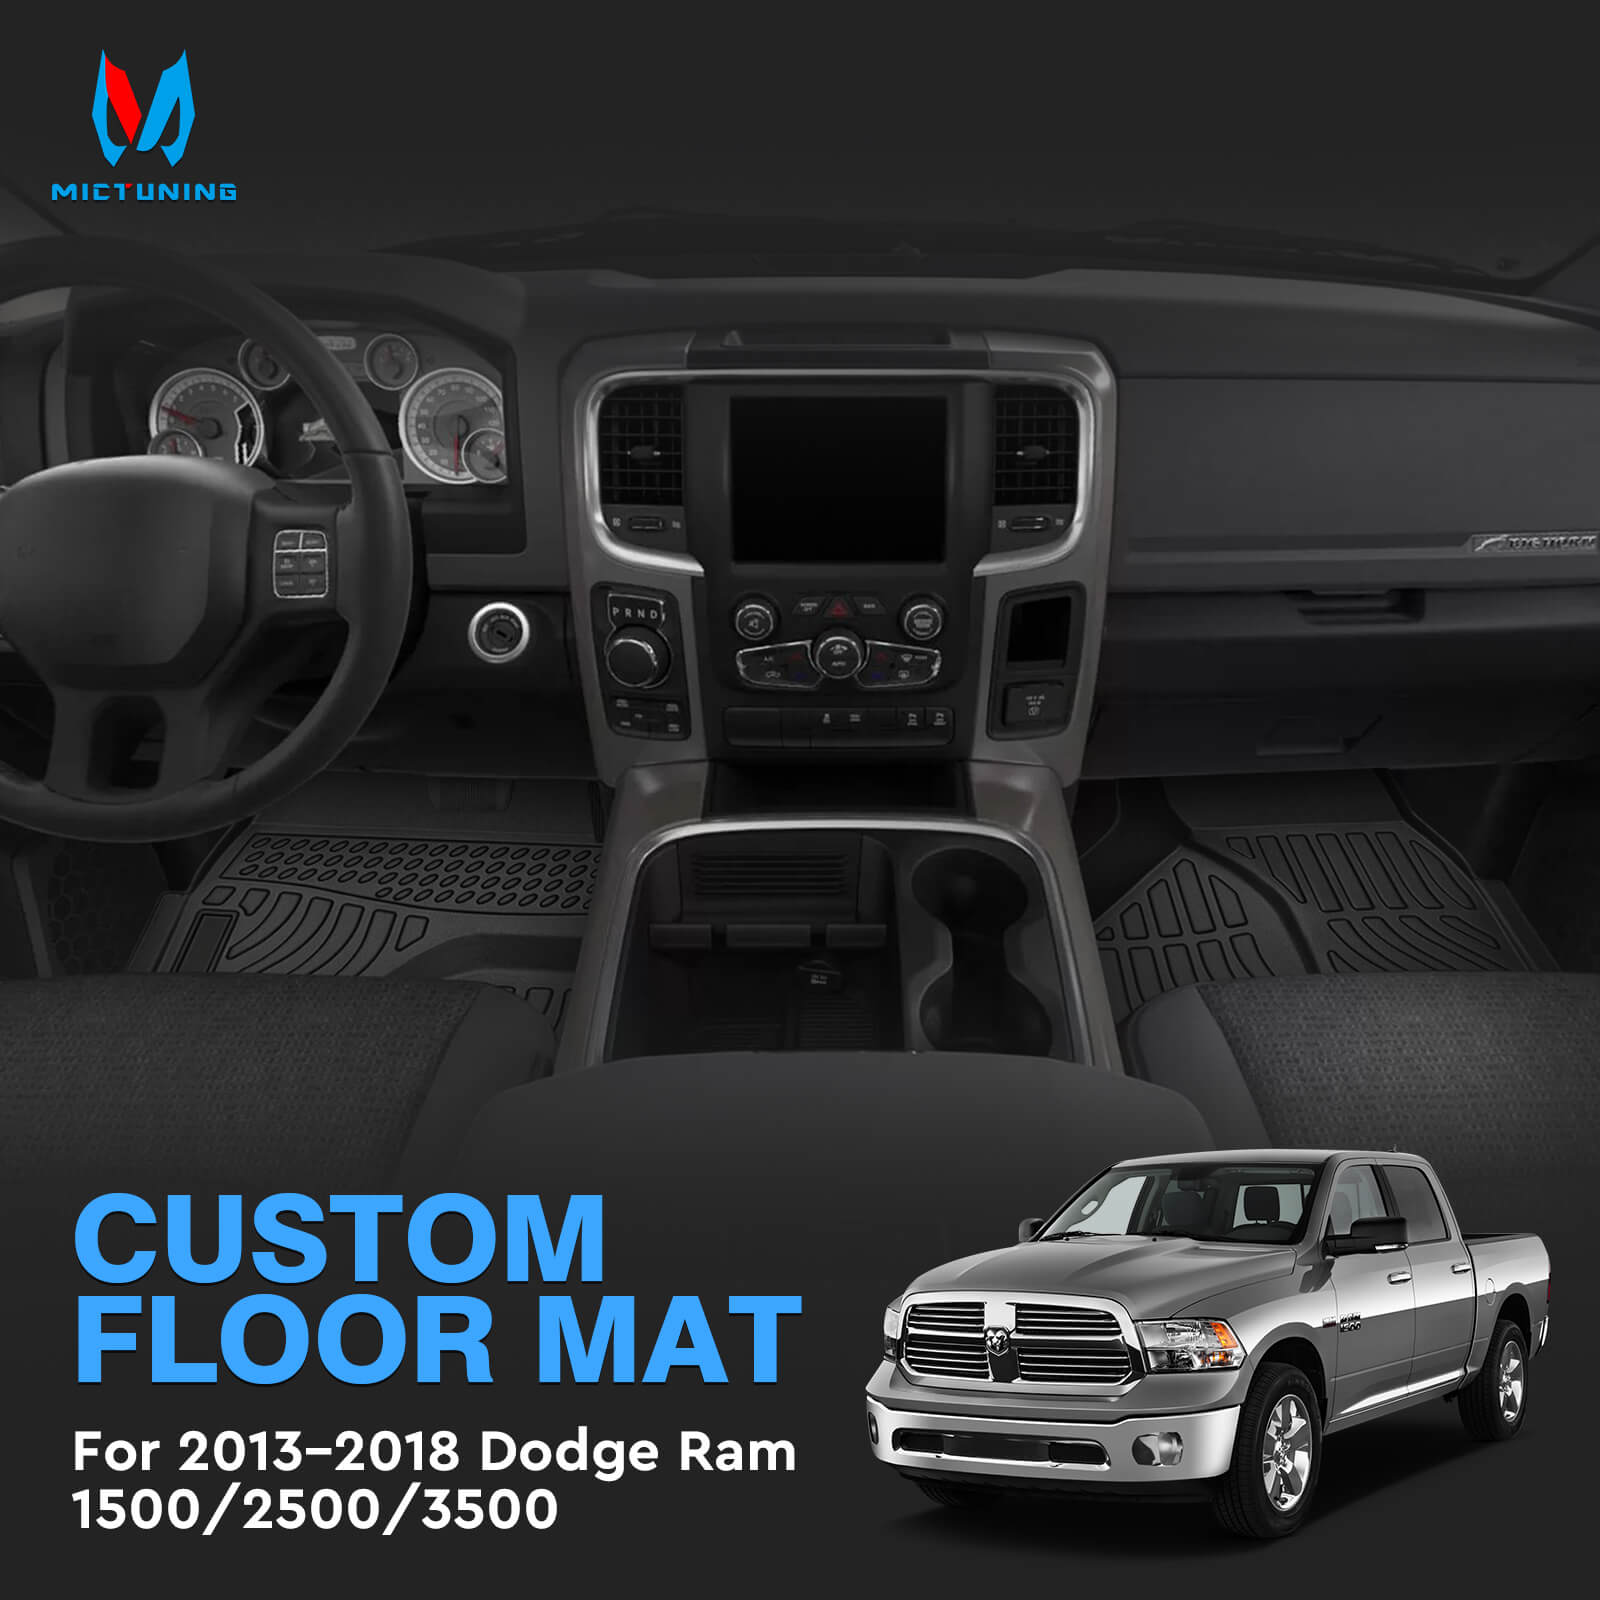 Dodge Ram 1500/2500/3500 Crew Cab 2013-2018 Floor Mats, 1st & 2nd Row Liner Set Custom Fit